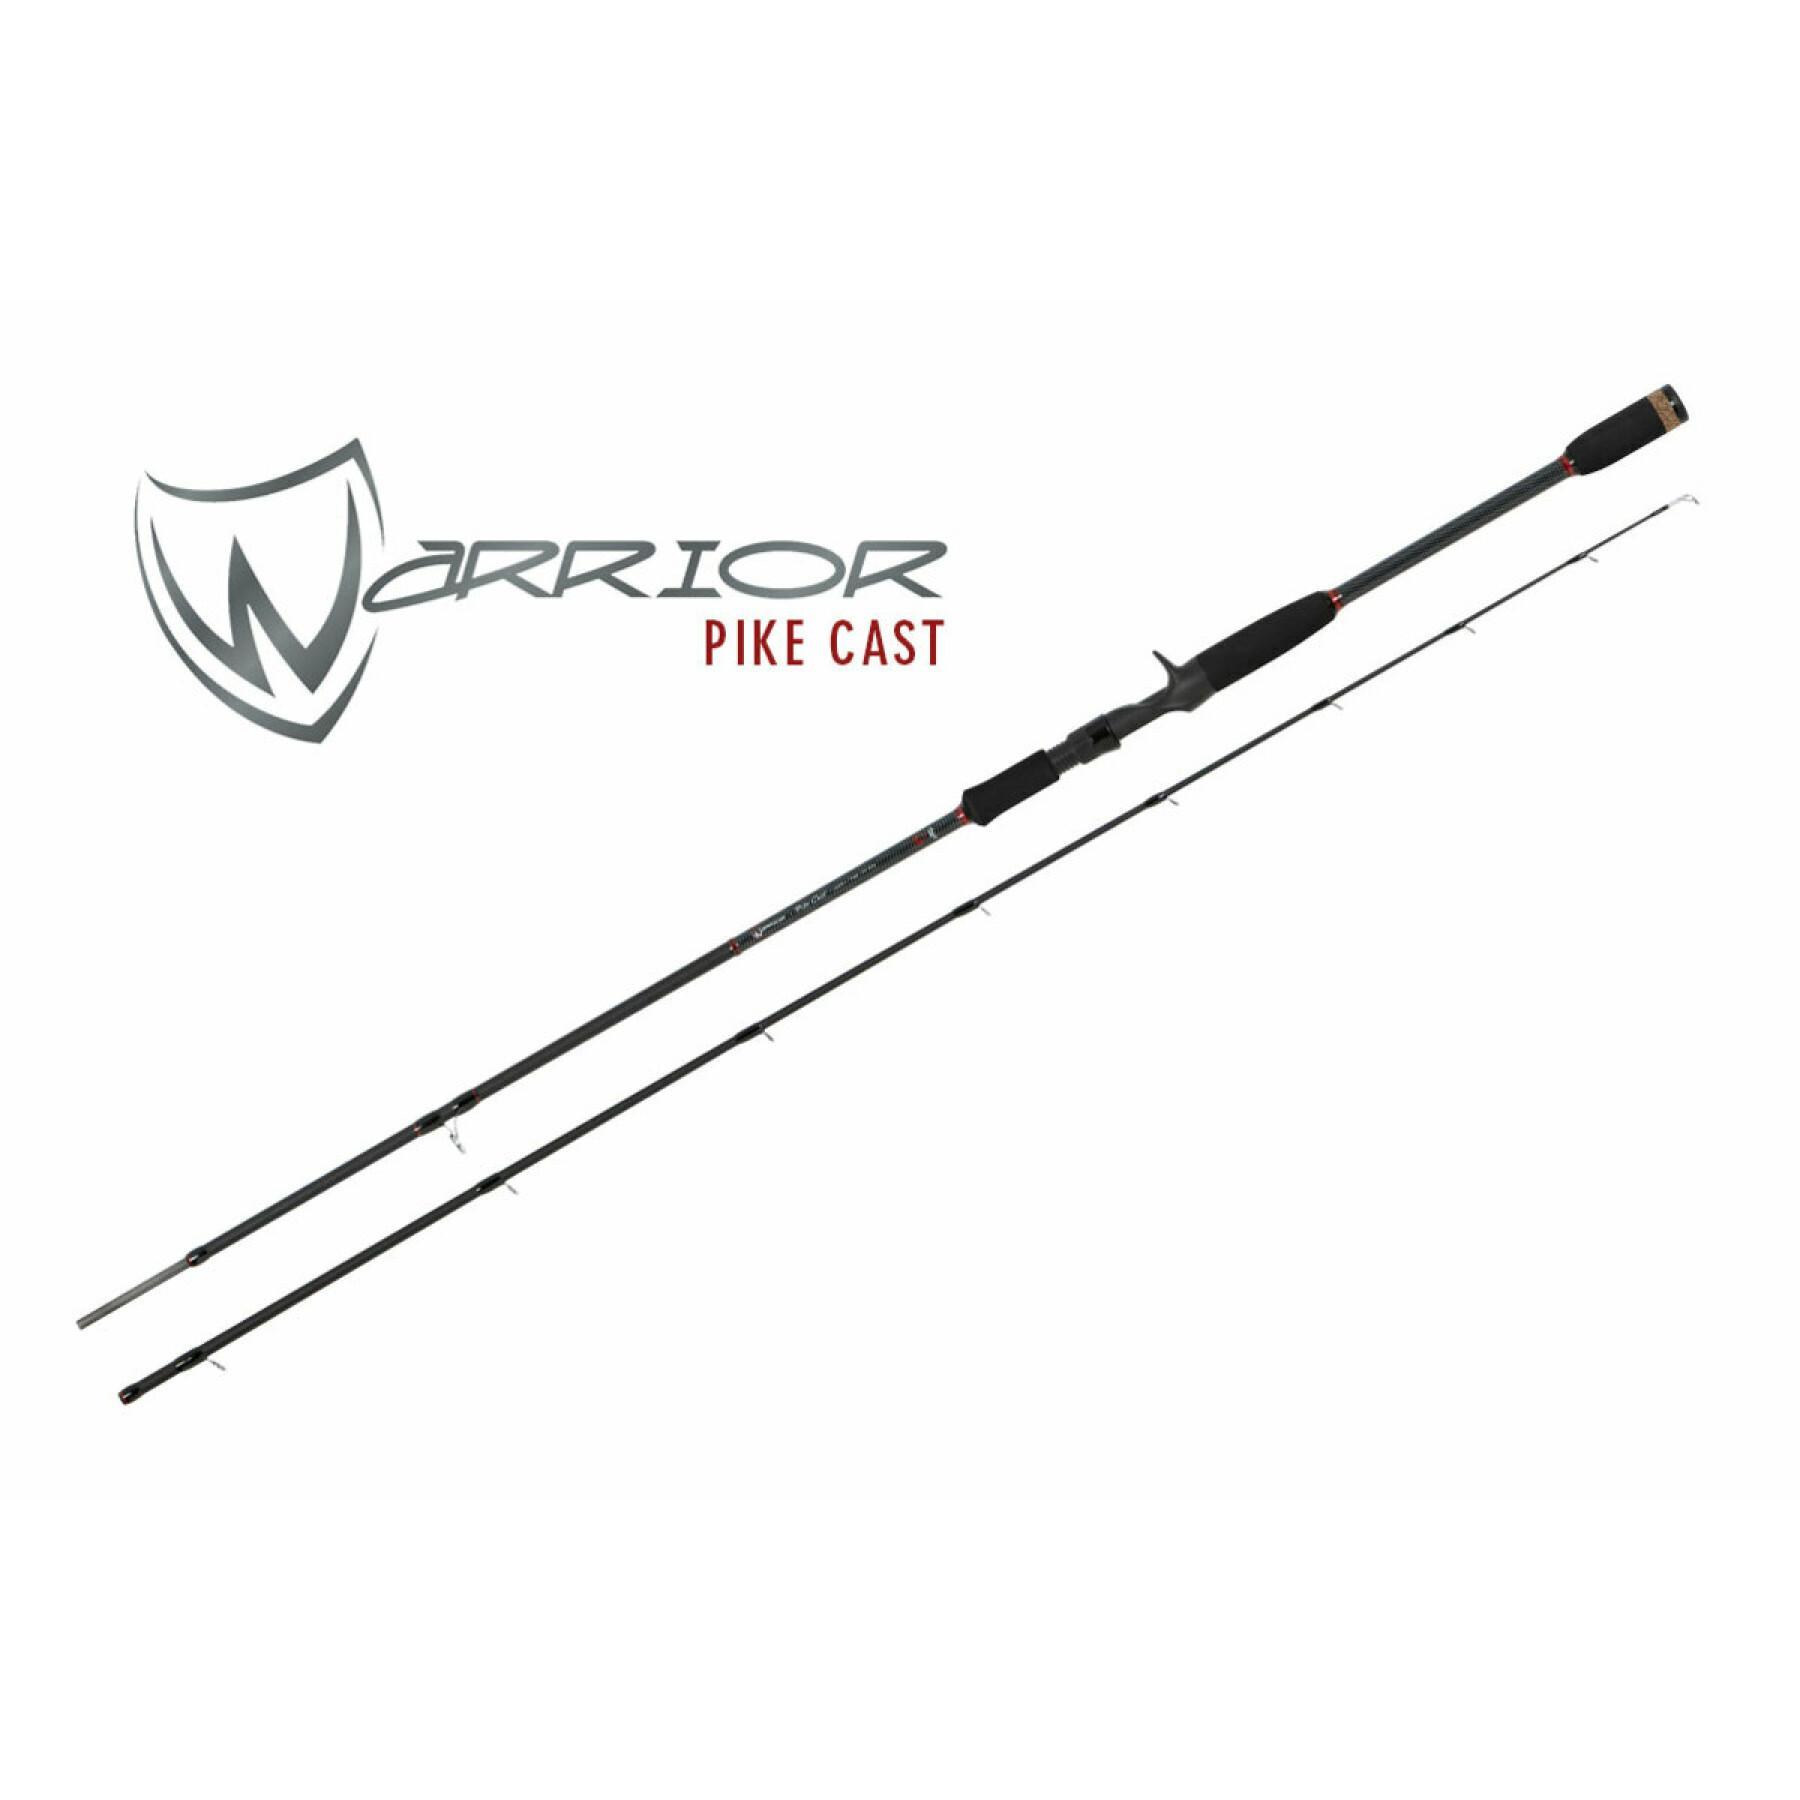 Cana Fox Rage warrior pike cast 225 cm 20-80 g